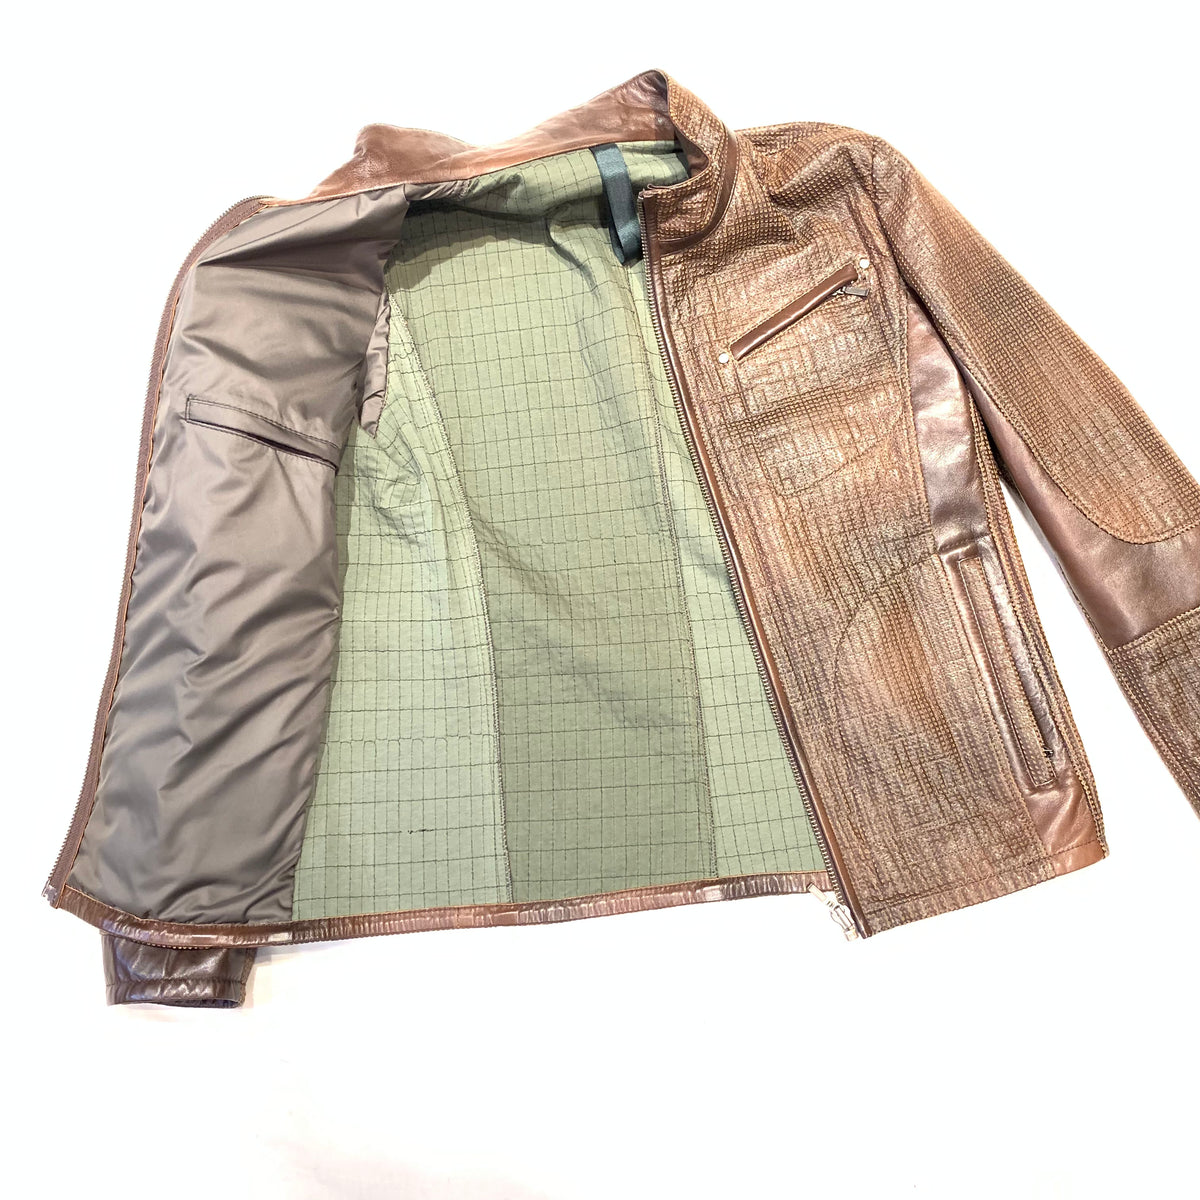 Barya NewYork Men's Perforated Lambskin Leather Jacket - Dudes Boutique